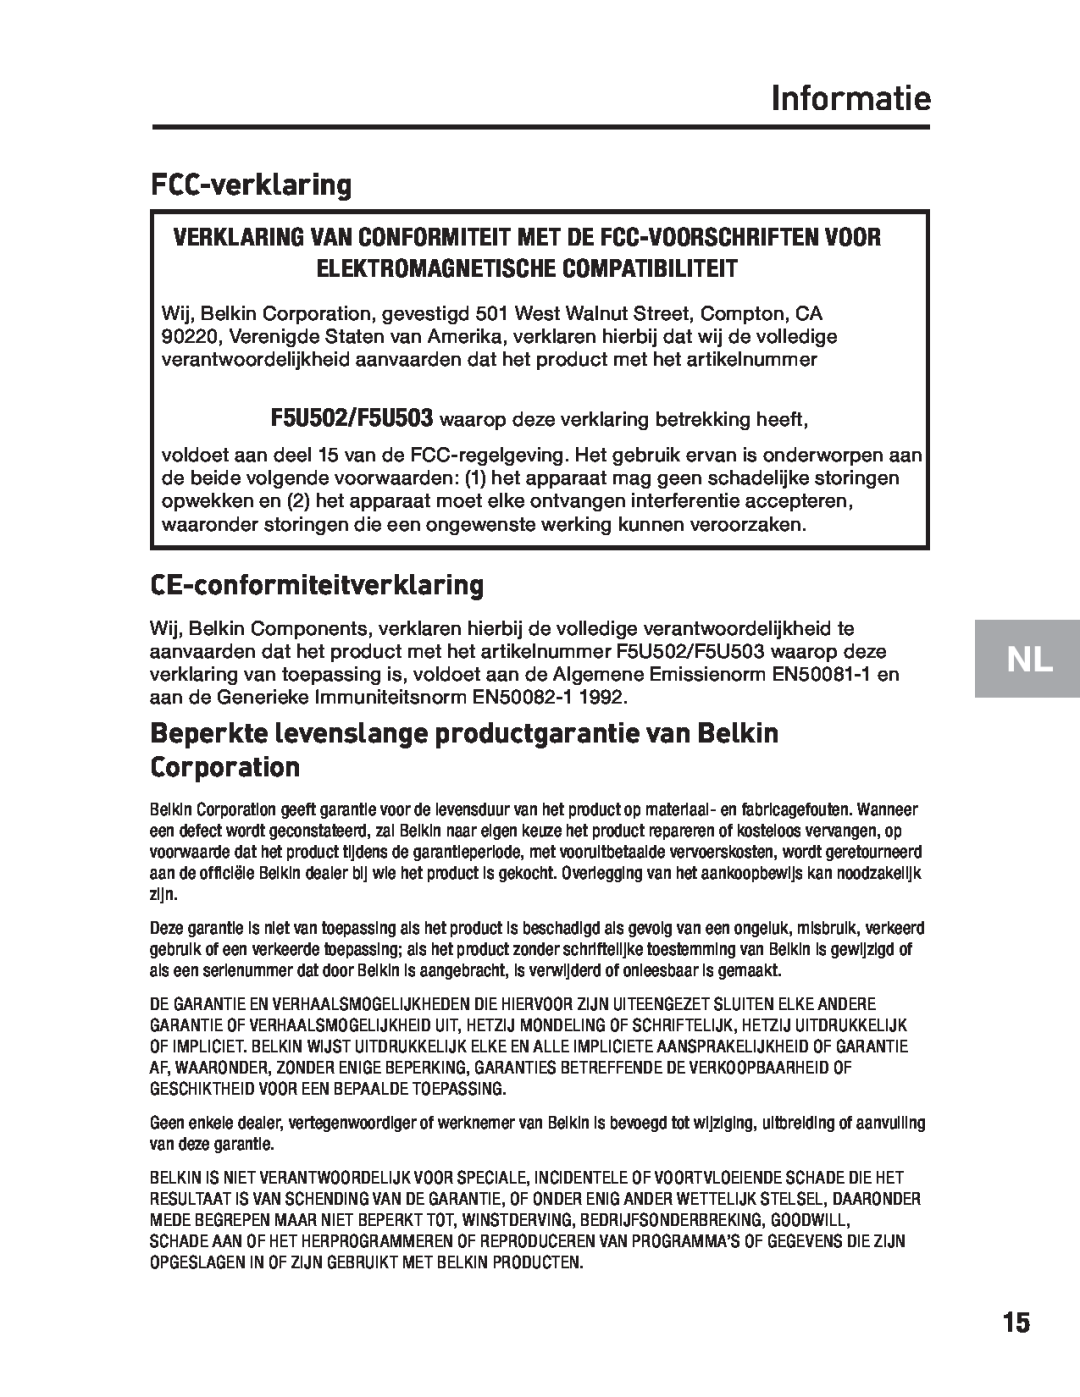 Belkin F5U502, F5U503 user manual Informatie, FCC-verklaring, CE-conformiteitverklaring 